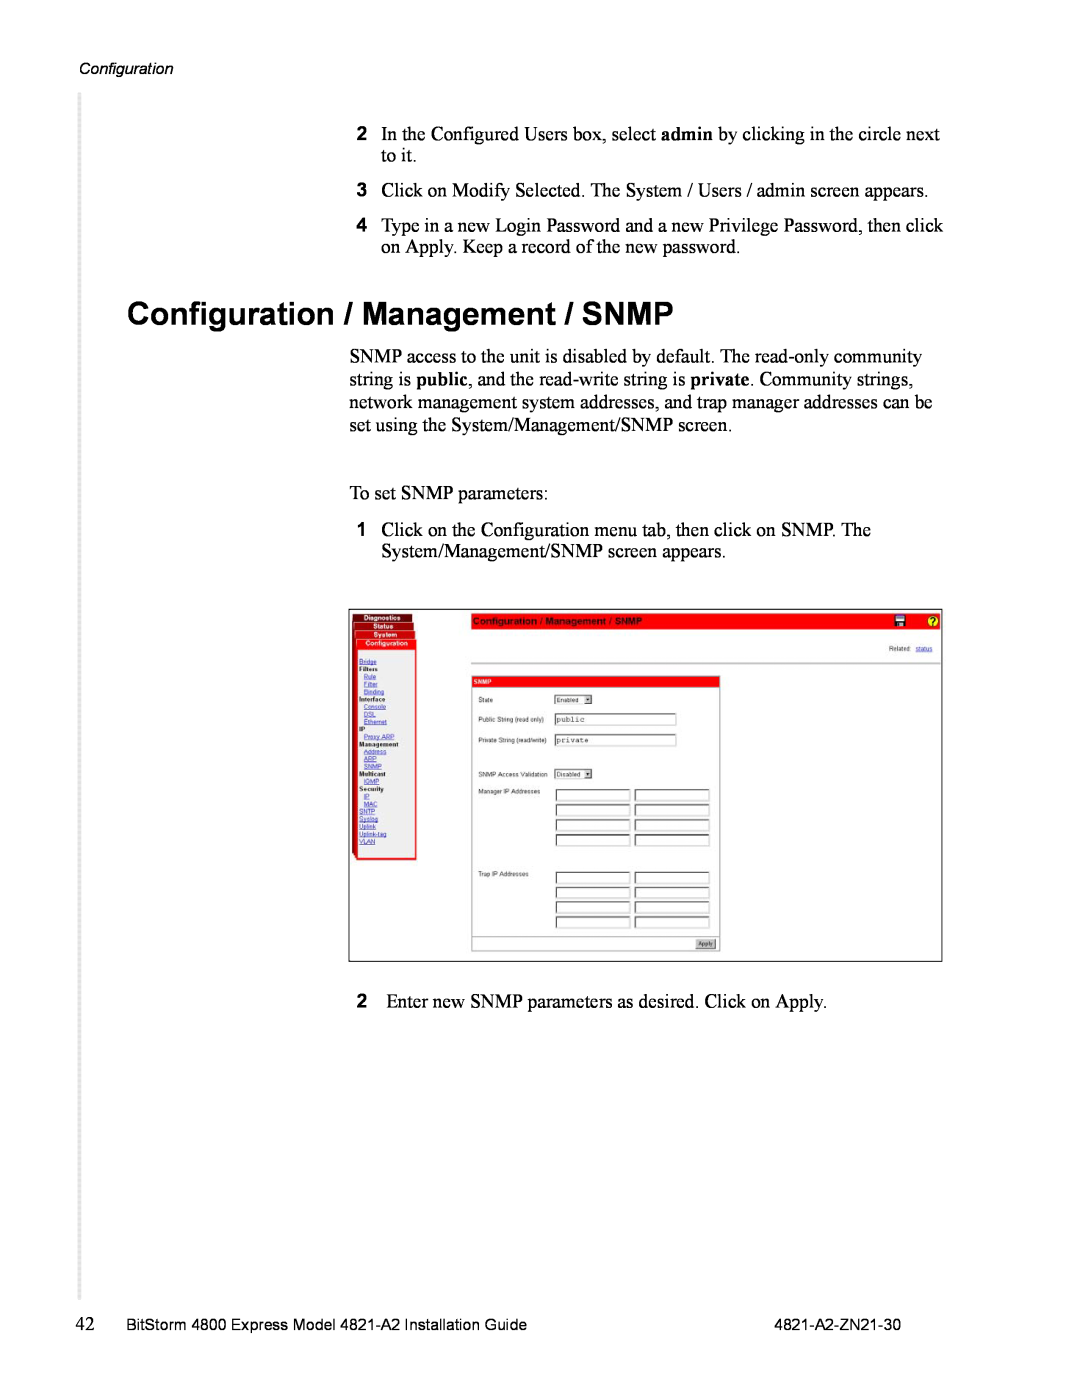 Zhone Technologies 4821-A2 manual Configuration / Management / SNMP 